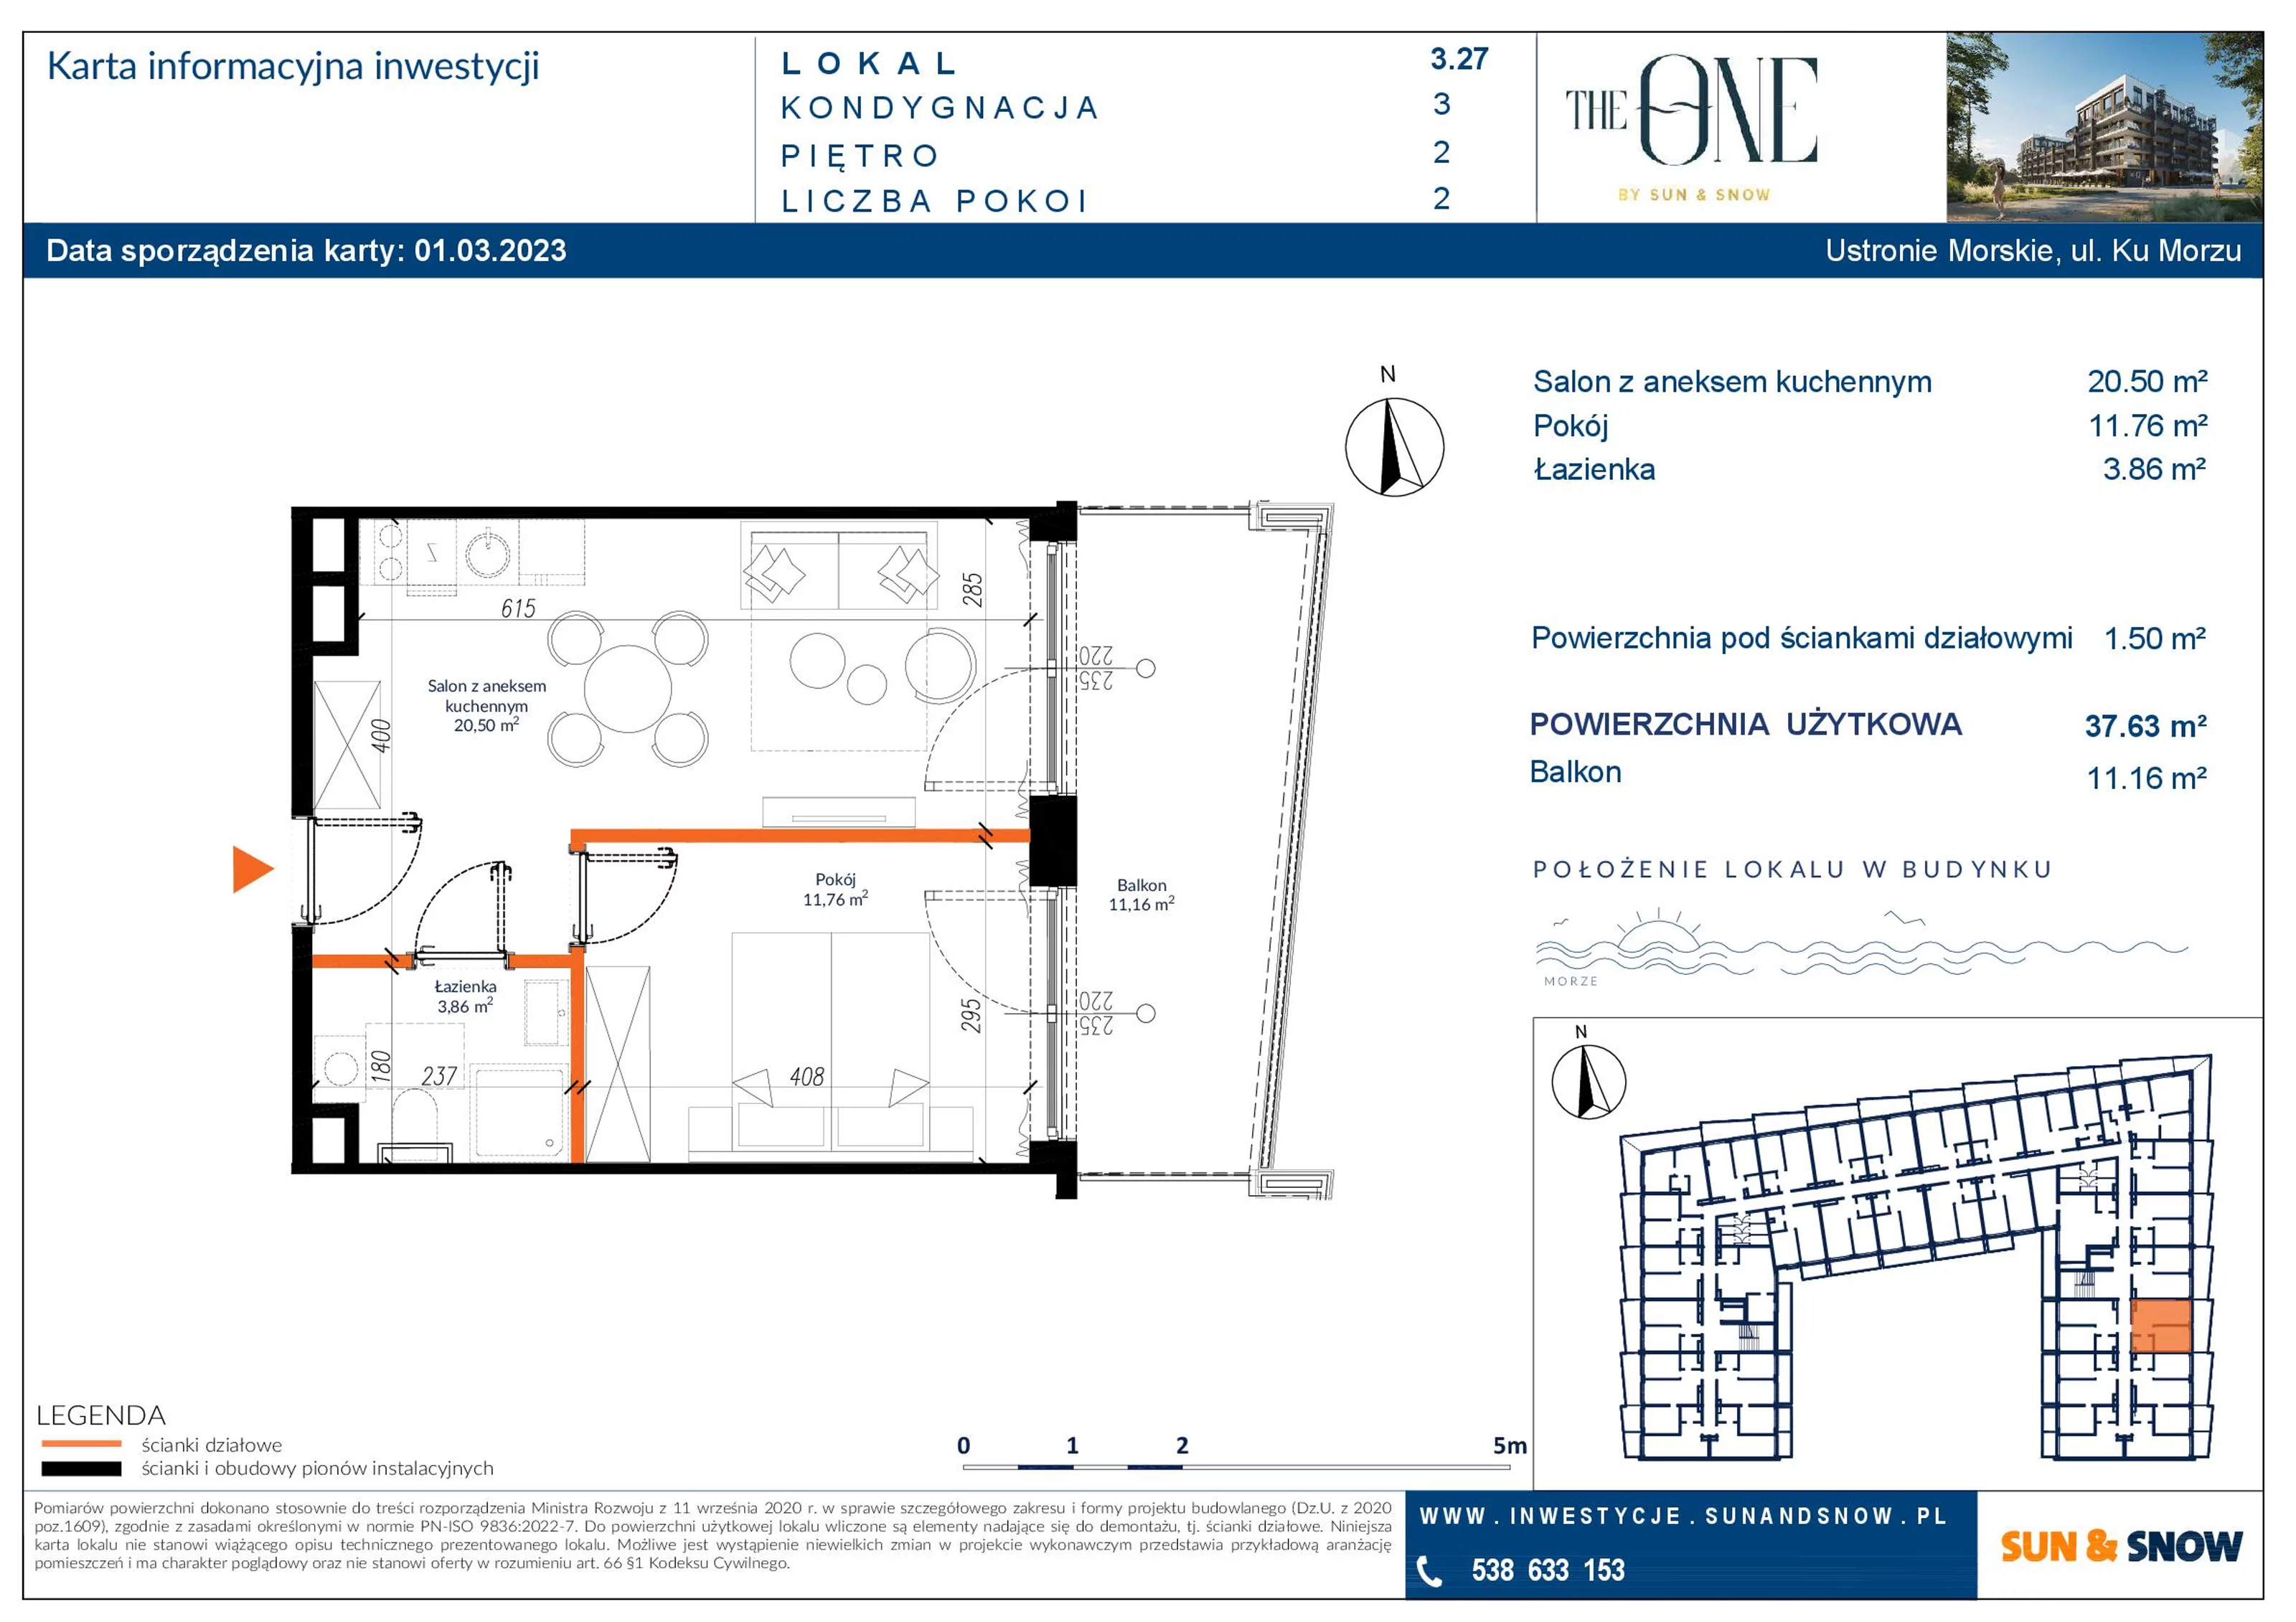 Apartament 37,63 m², piętro 2, oferta nr M/3/27, The One, Ustronie Morskie, ul. Ku Morzu 4